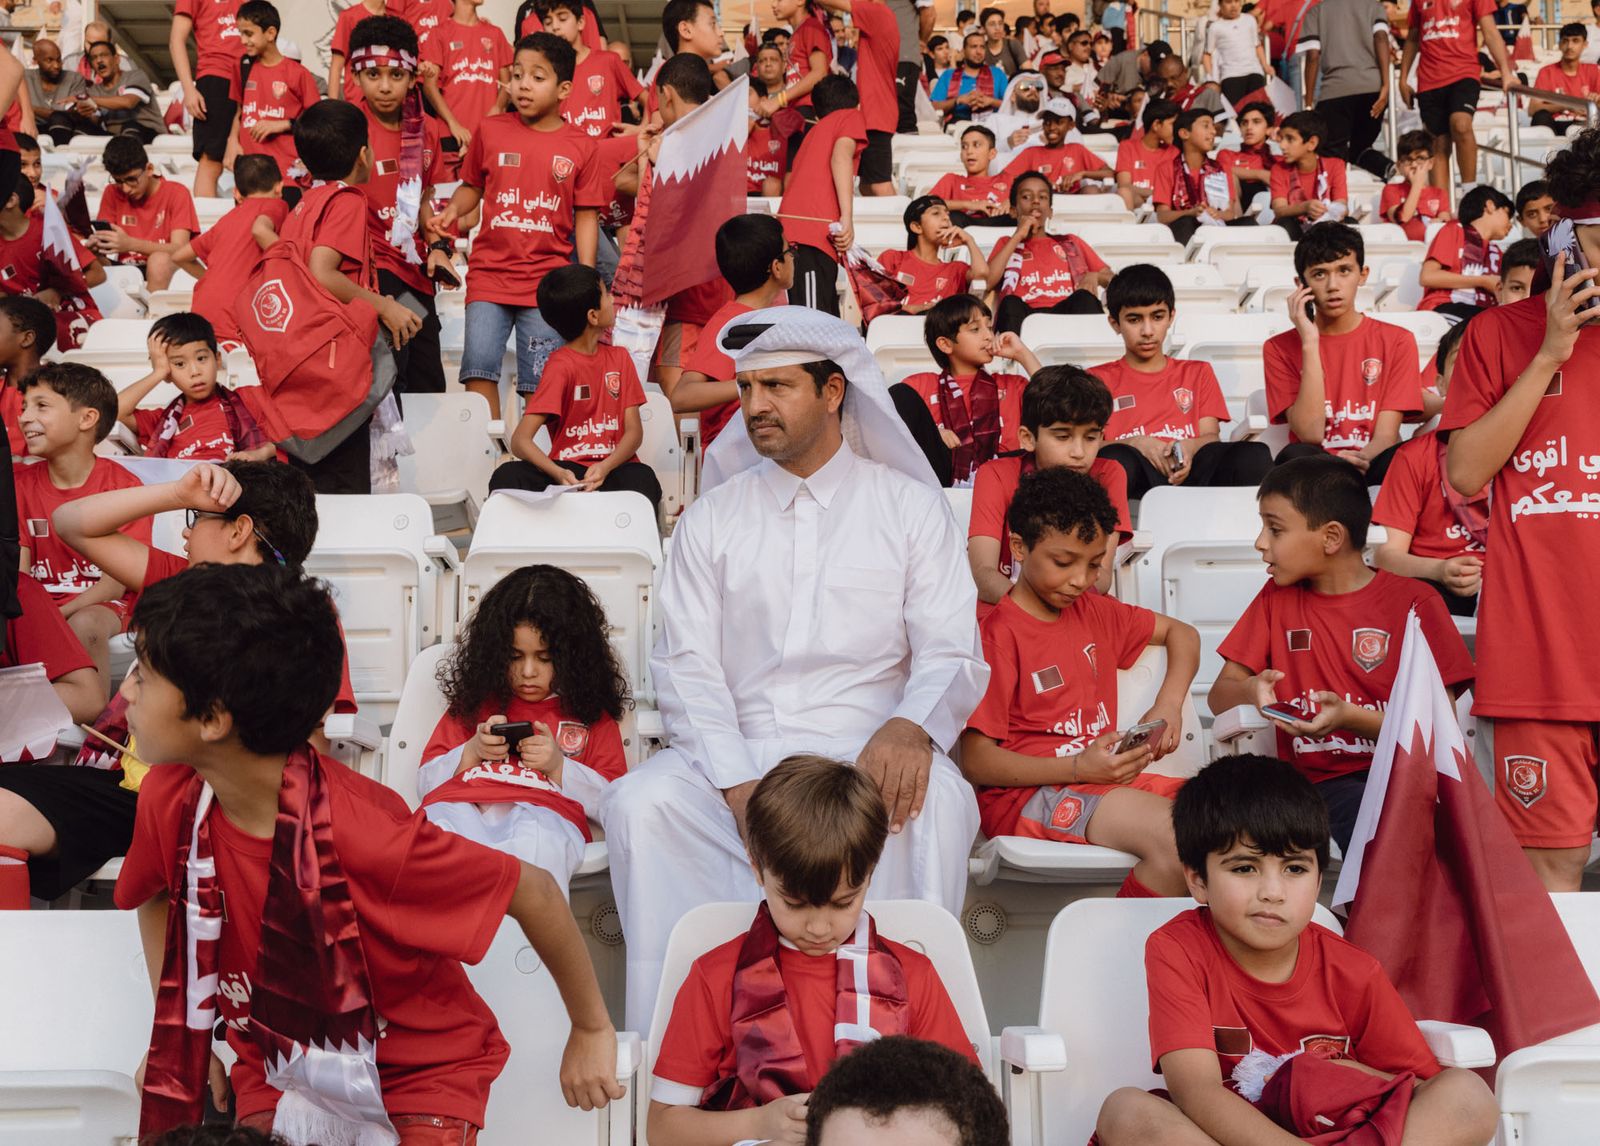 © Matteo De Mayda - Qatar fans during national team training at Jassim bin Hamad Stadium in Al Sadd Club. Qatar, 2022.